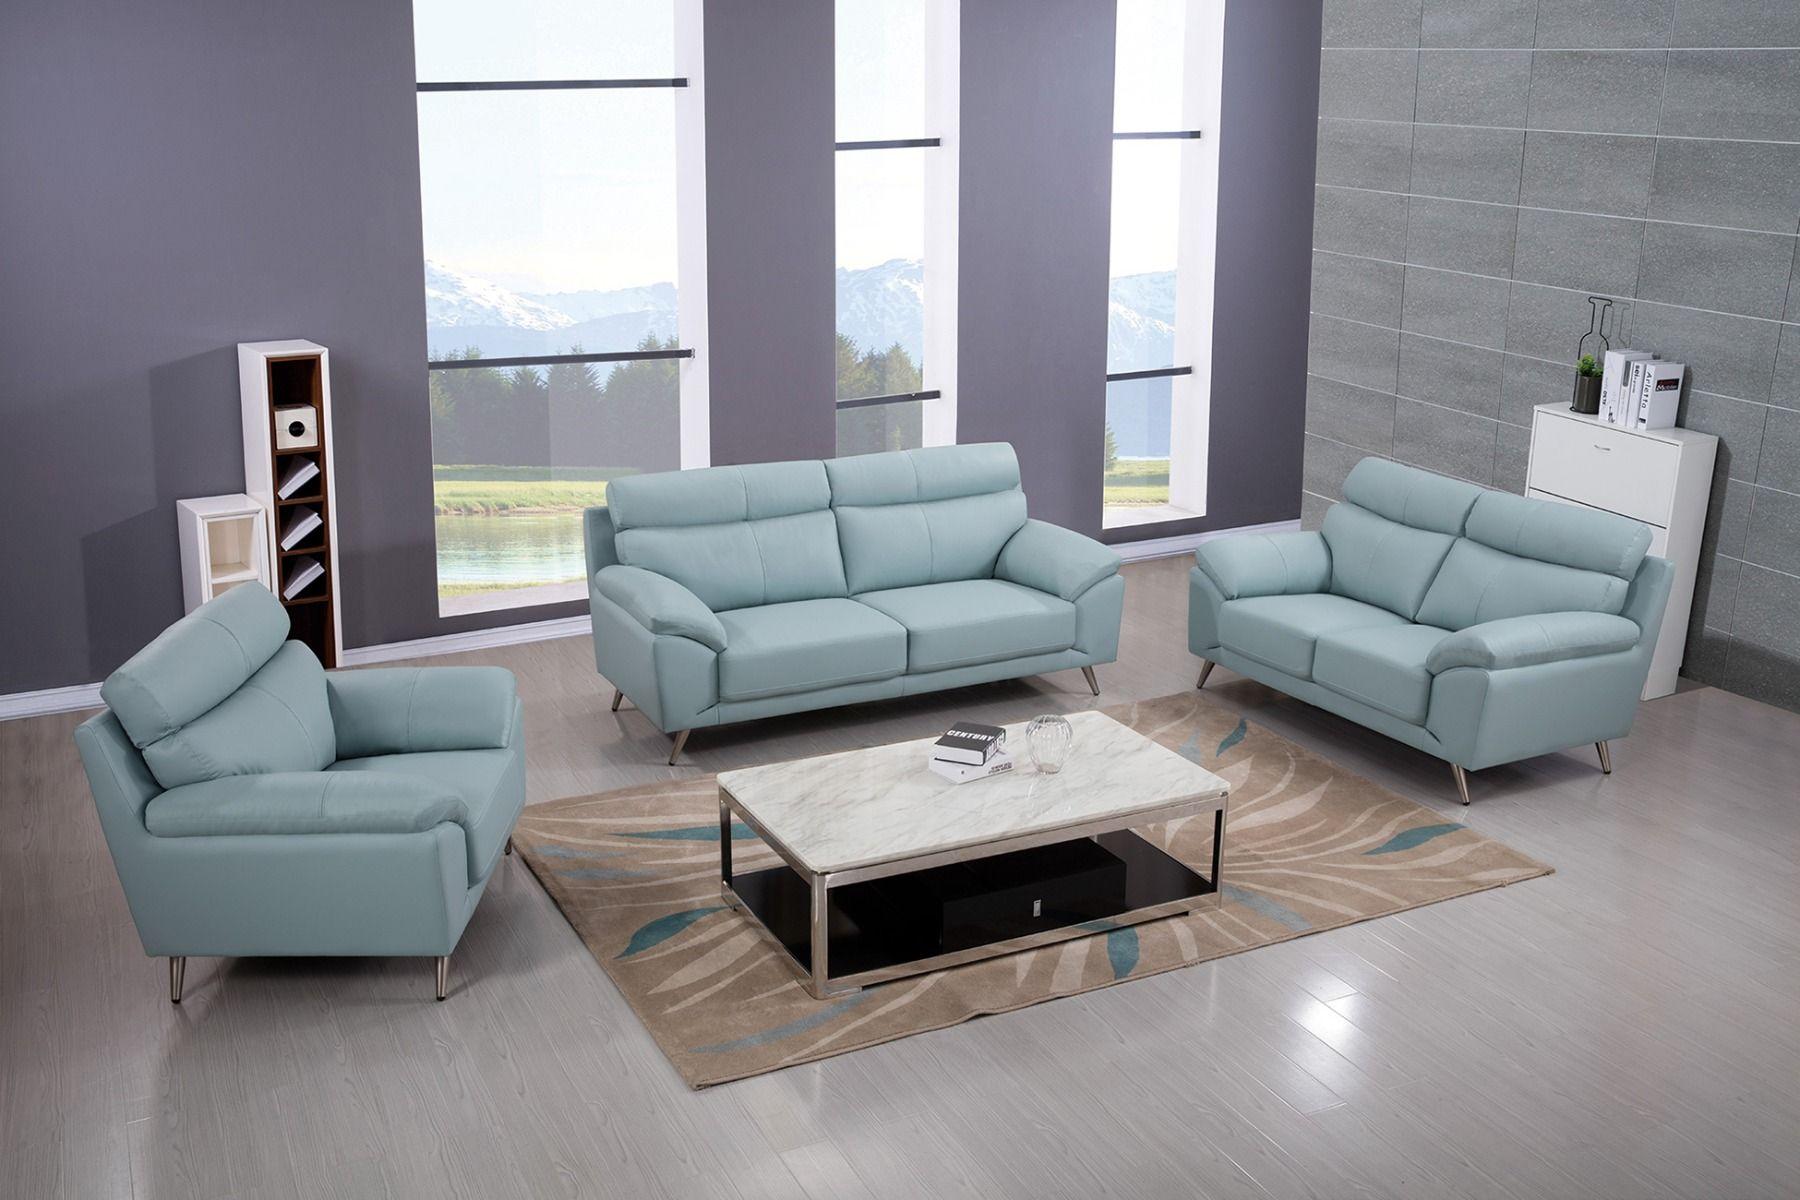 Contemporary, Modern Sofa Set EK528-LB-SF EK528-LB-SF-Set-3 in Teal Italian Leather